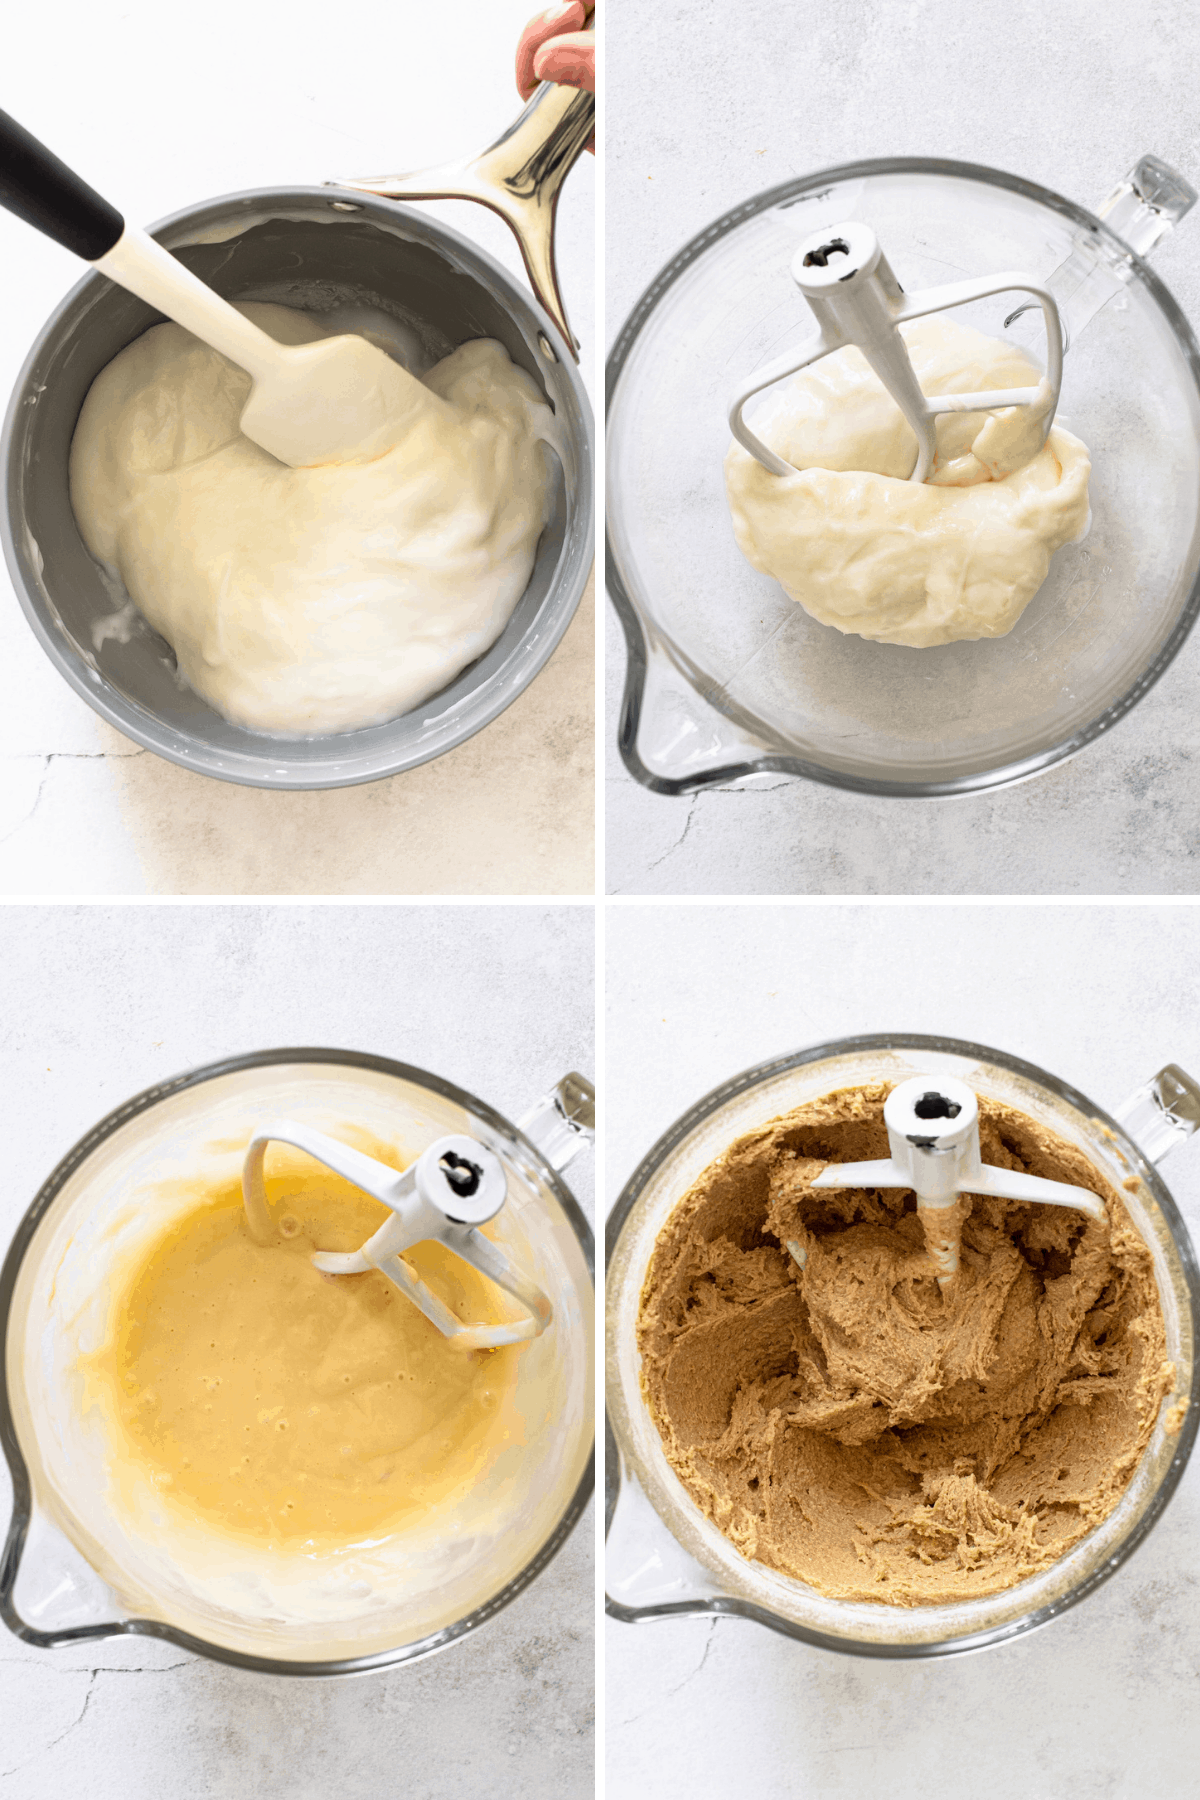 Steps for making an oat flour cinnamon roll.